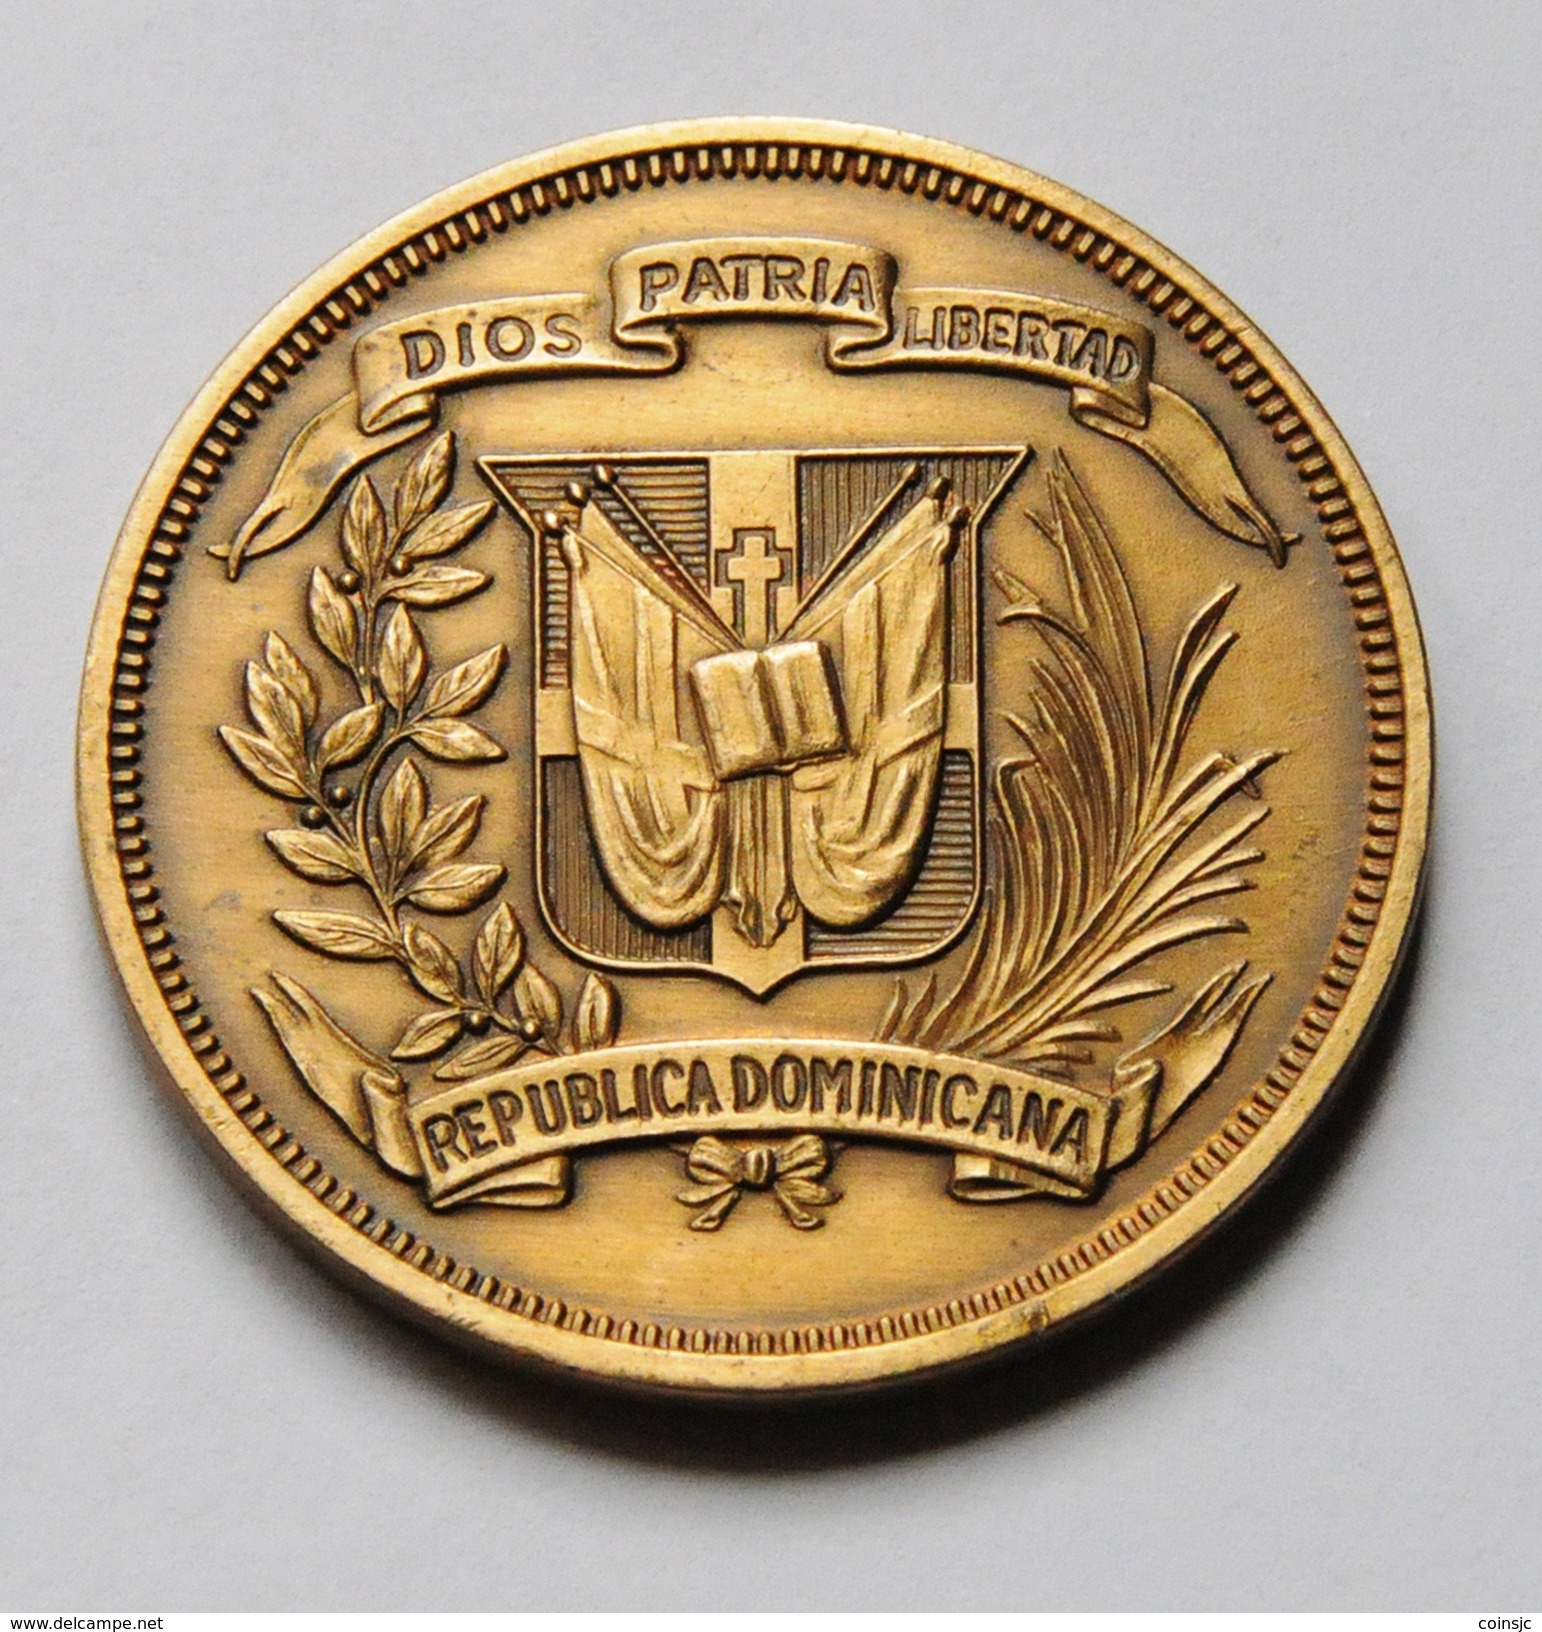 Dominican Republic - Medal - No Date - Firma's